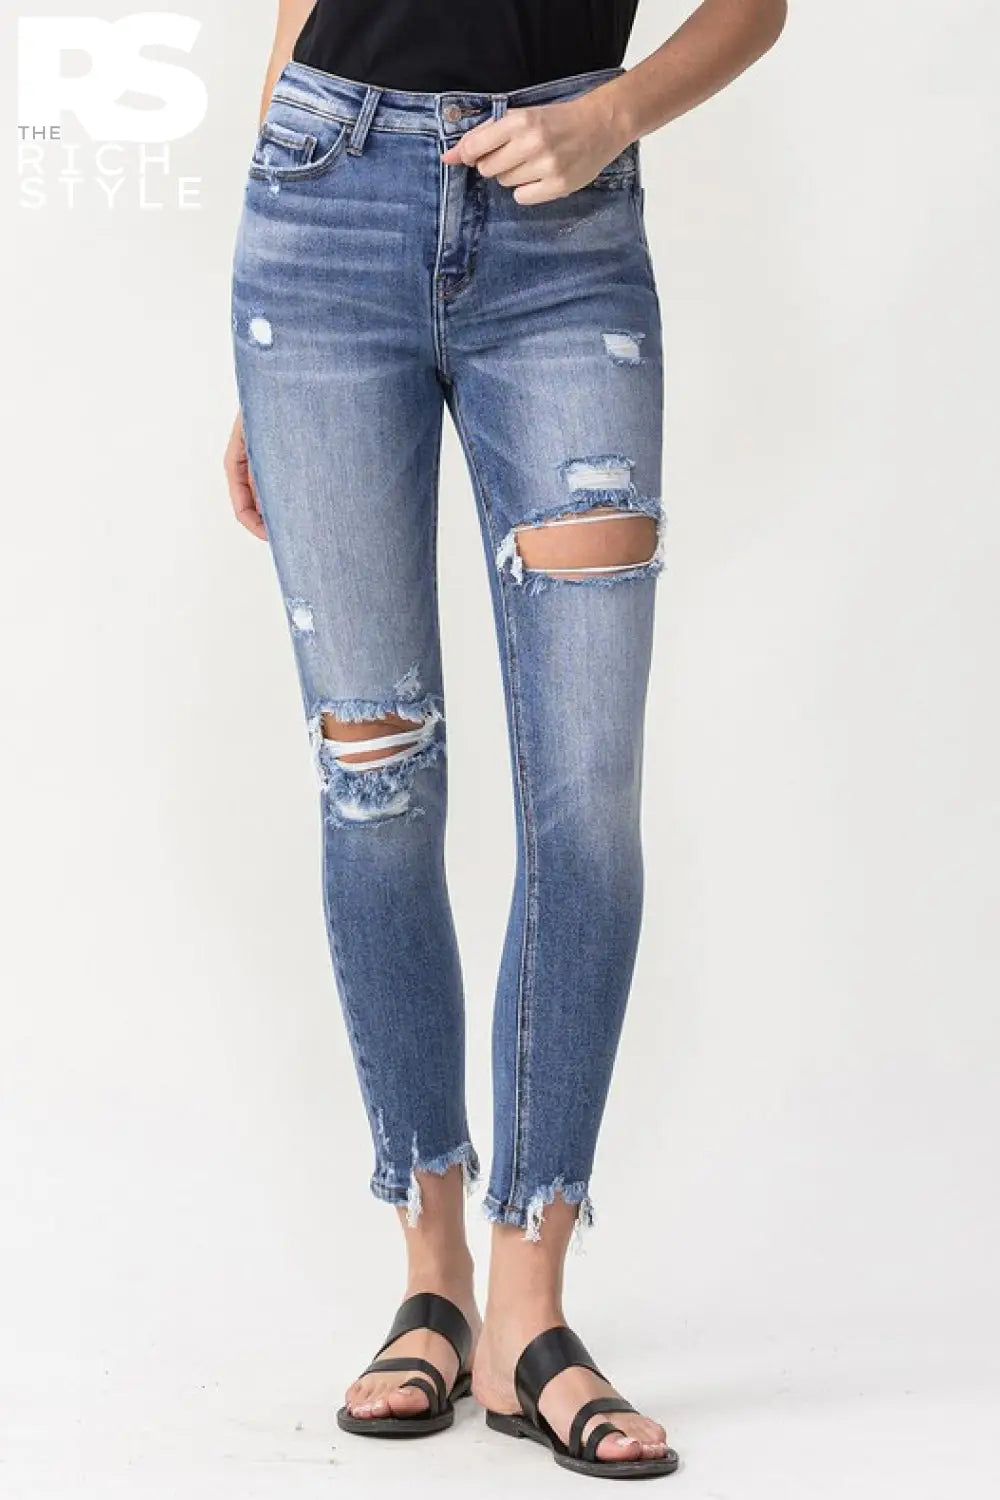 Lovervet Juliana Full Size High Rise Distressed Skinny Jeans Medium / 24